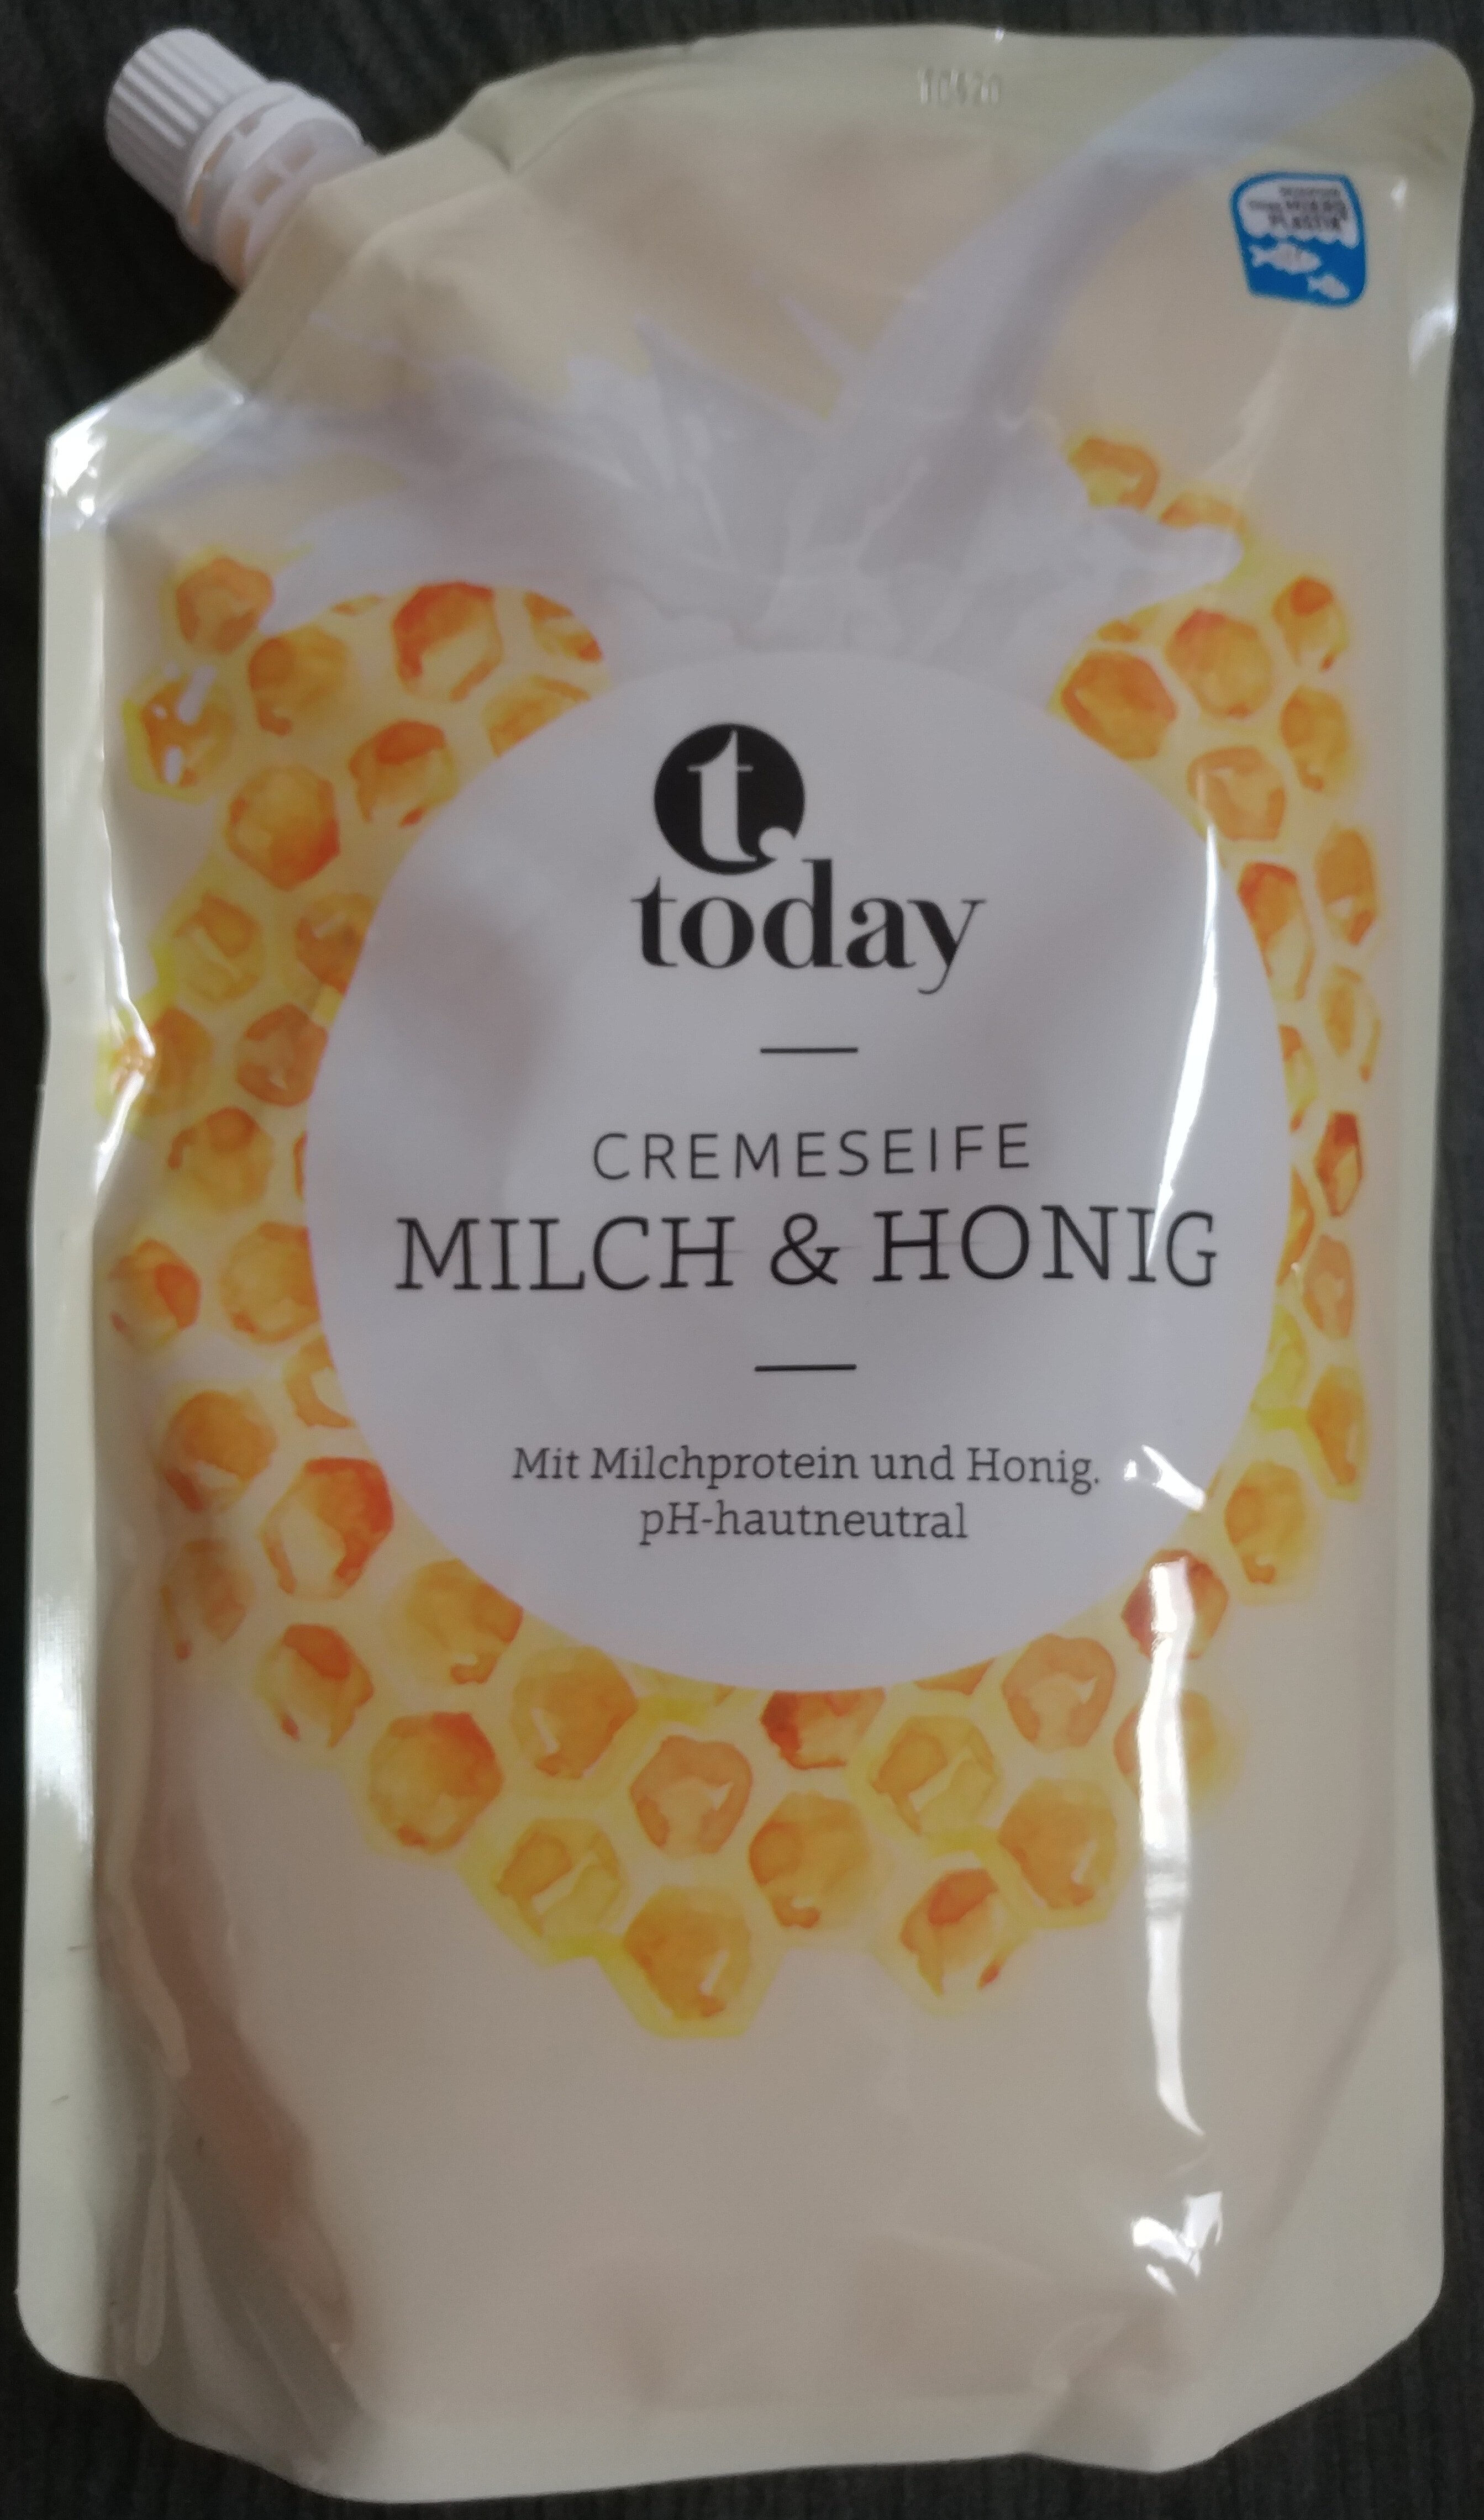 Cremseife Milch & Honig - Product - de